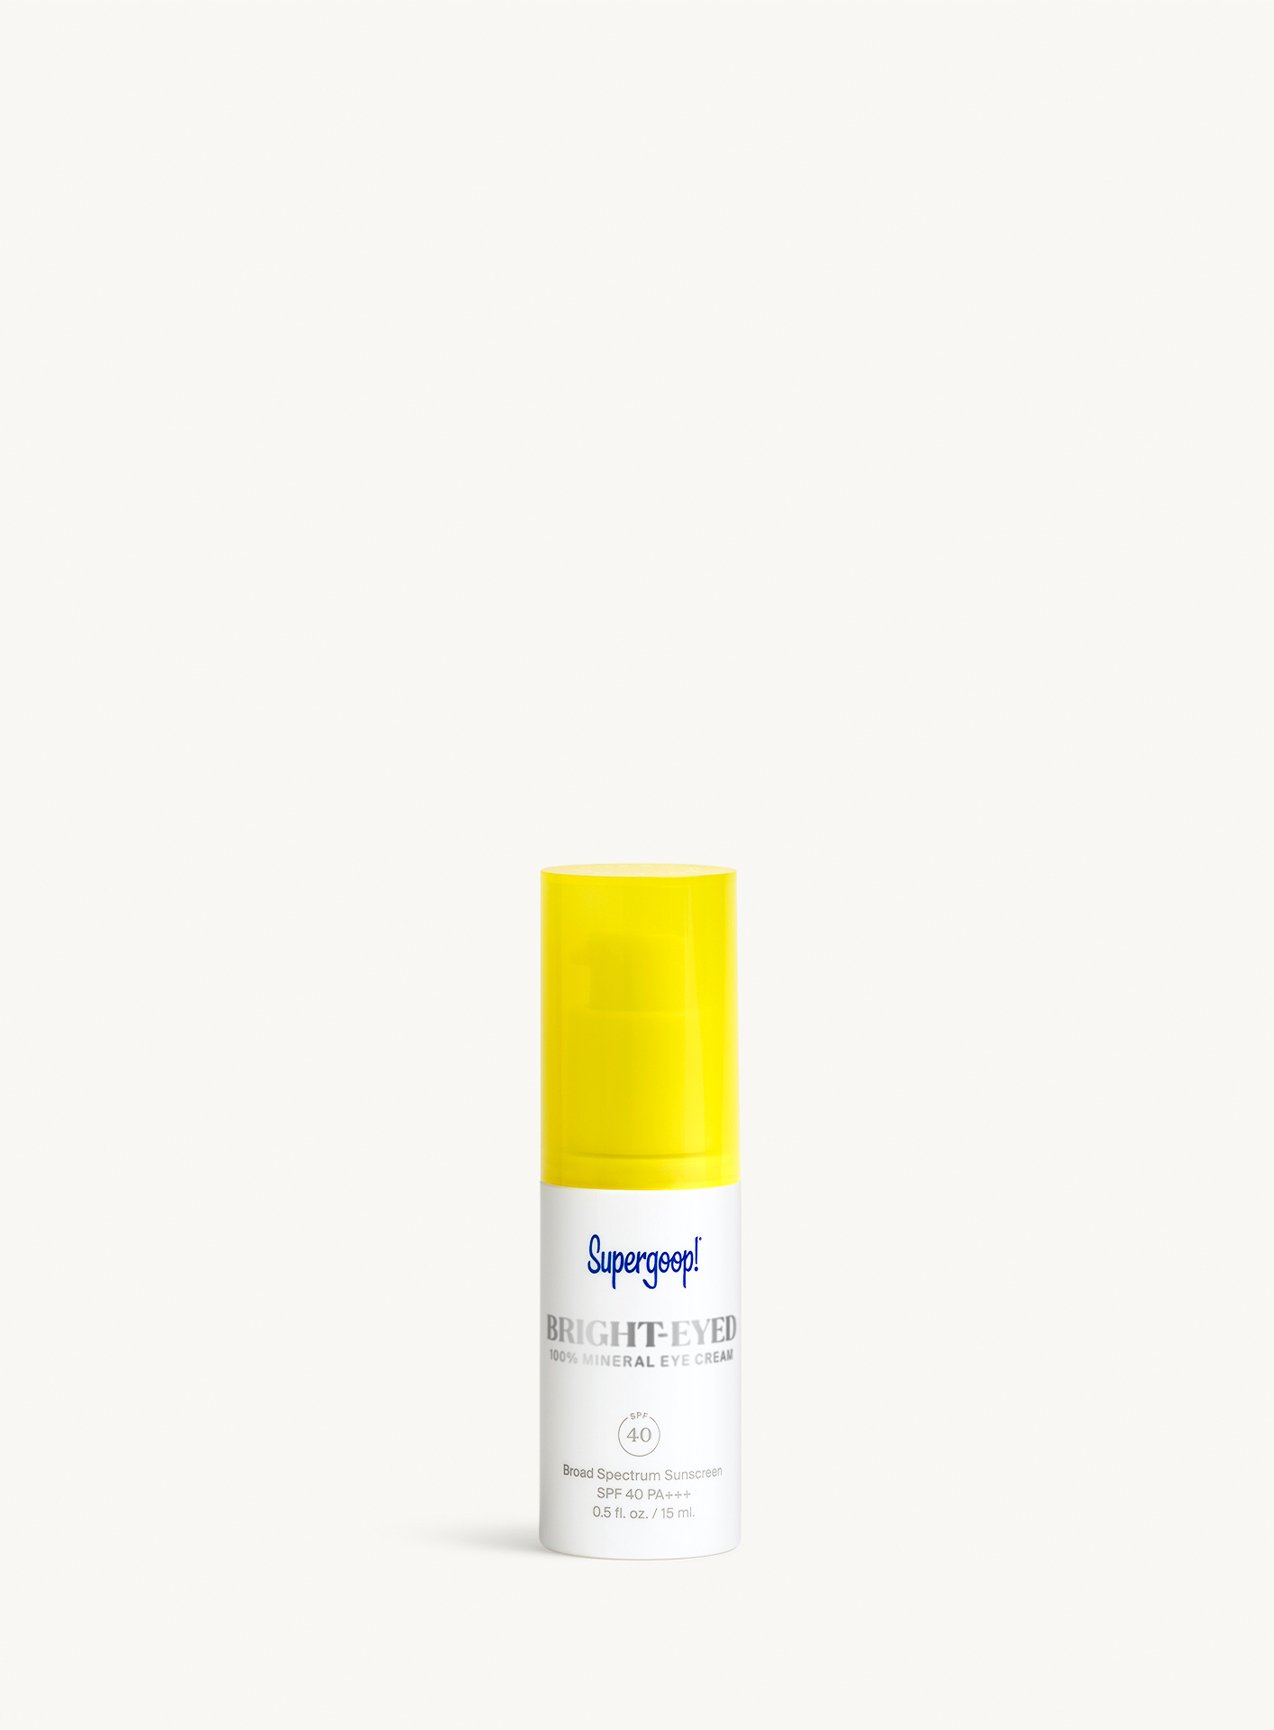 Supergoop! 100% Mineral Eye Cream SPF 40 Beauty-Addict.com